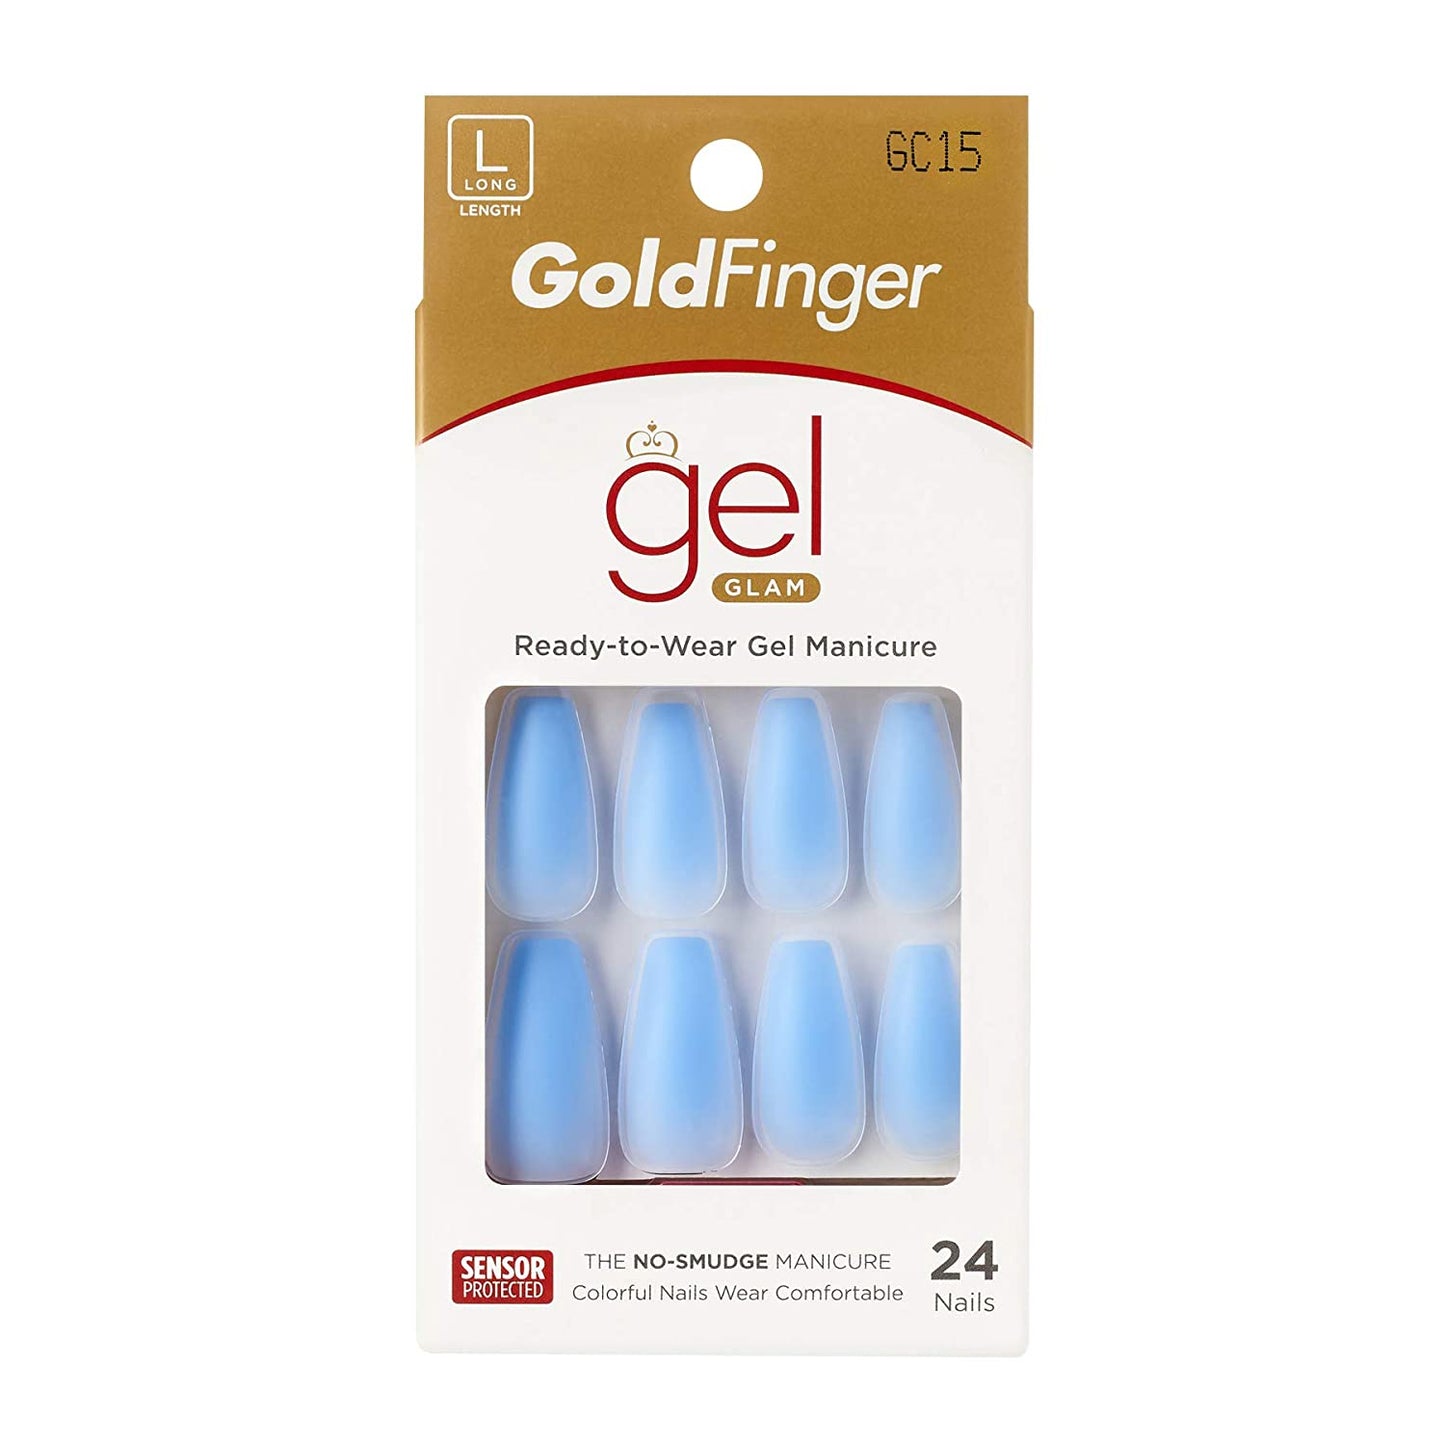 KISS GoldFinger Gel Glam Manicure Nails GC15